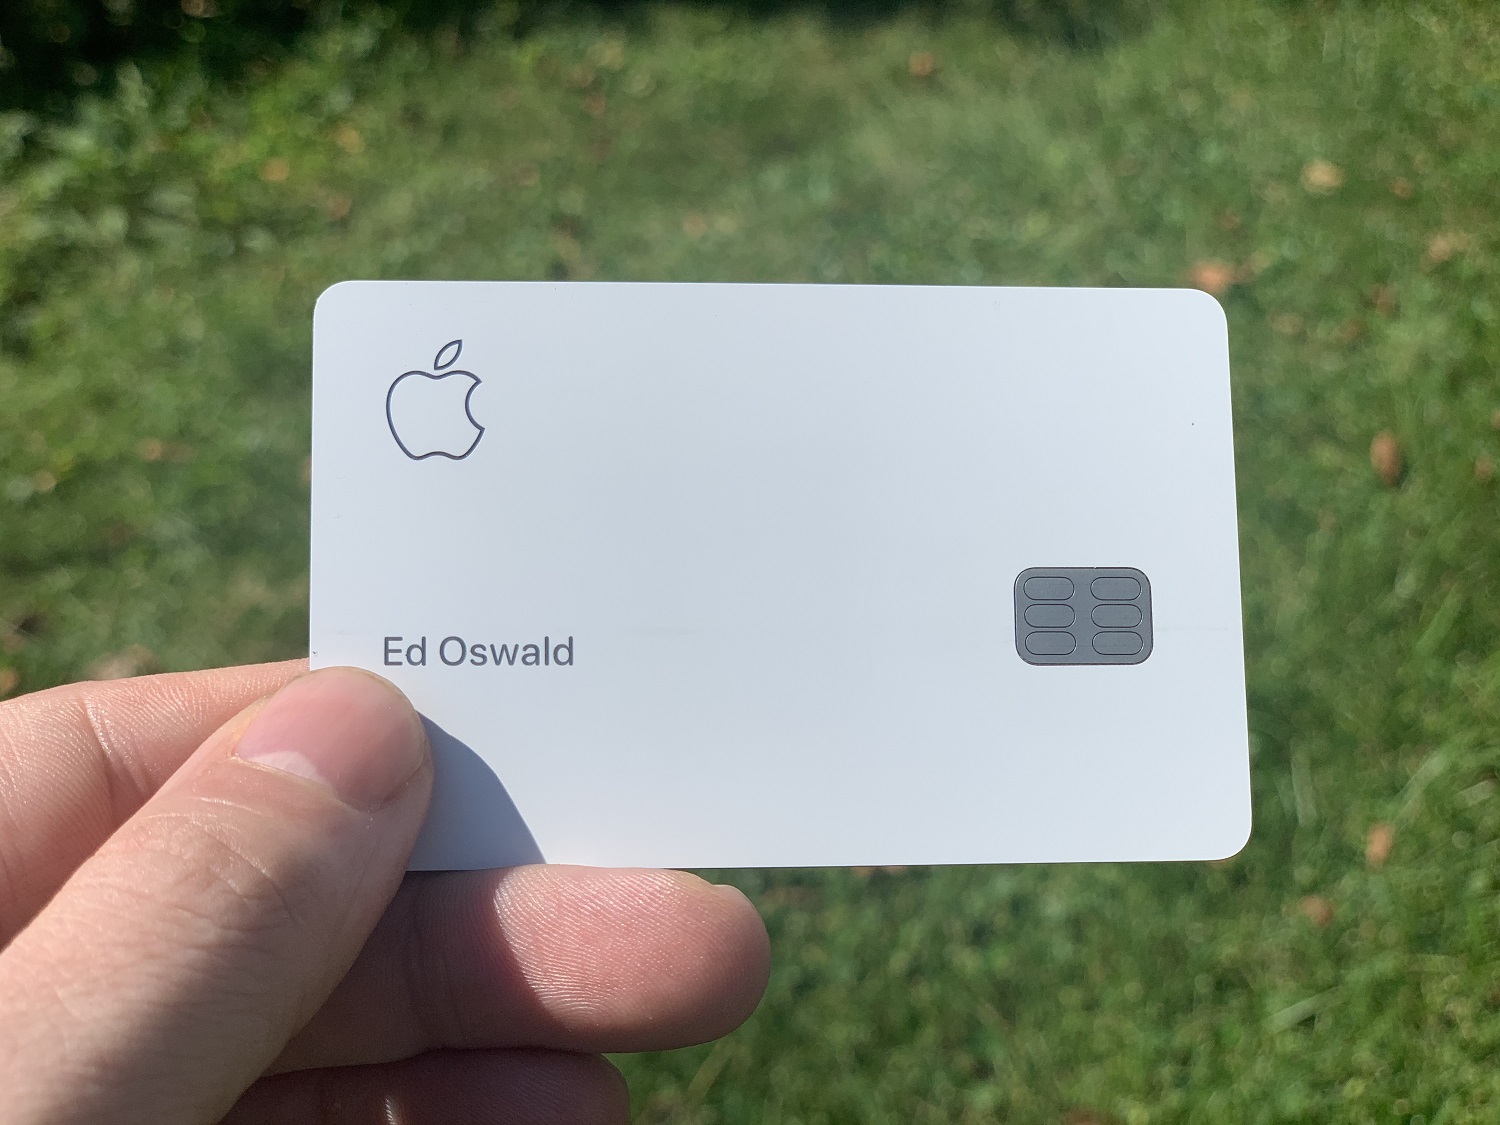 https://www.digitaltrends.com/wp-content/uploads/2019/08/apple-card-ed-oswald.jpg?p=1